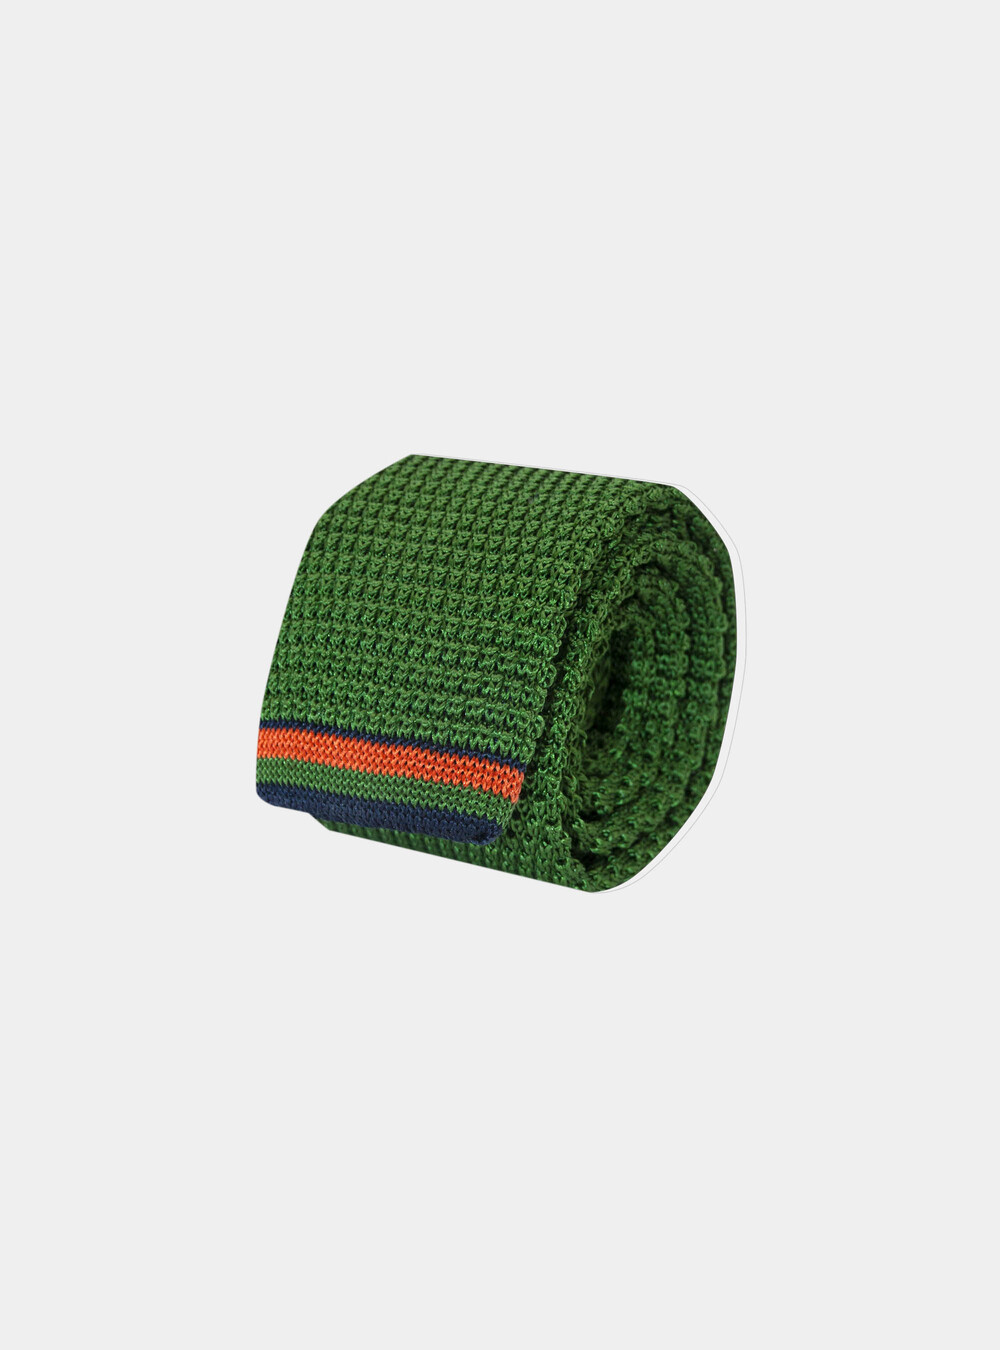 Knitted tie | GutteridgeUS | catalog-gutteridge-storefront Uomo